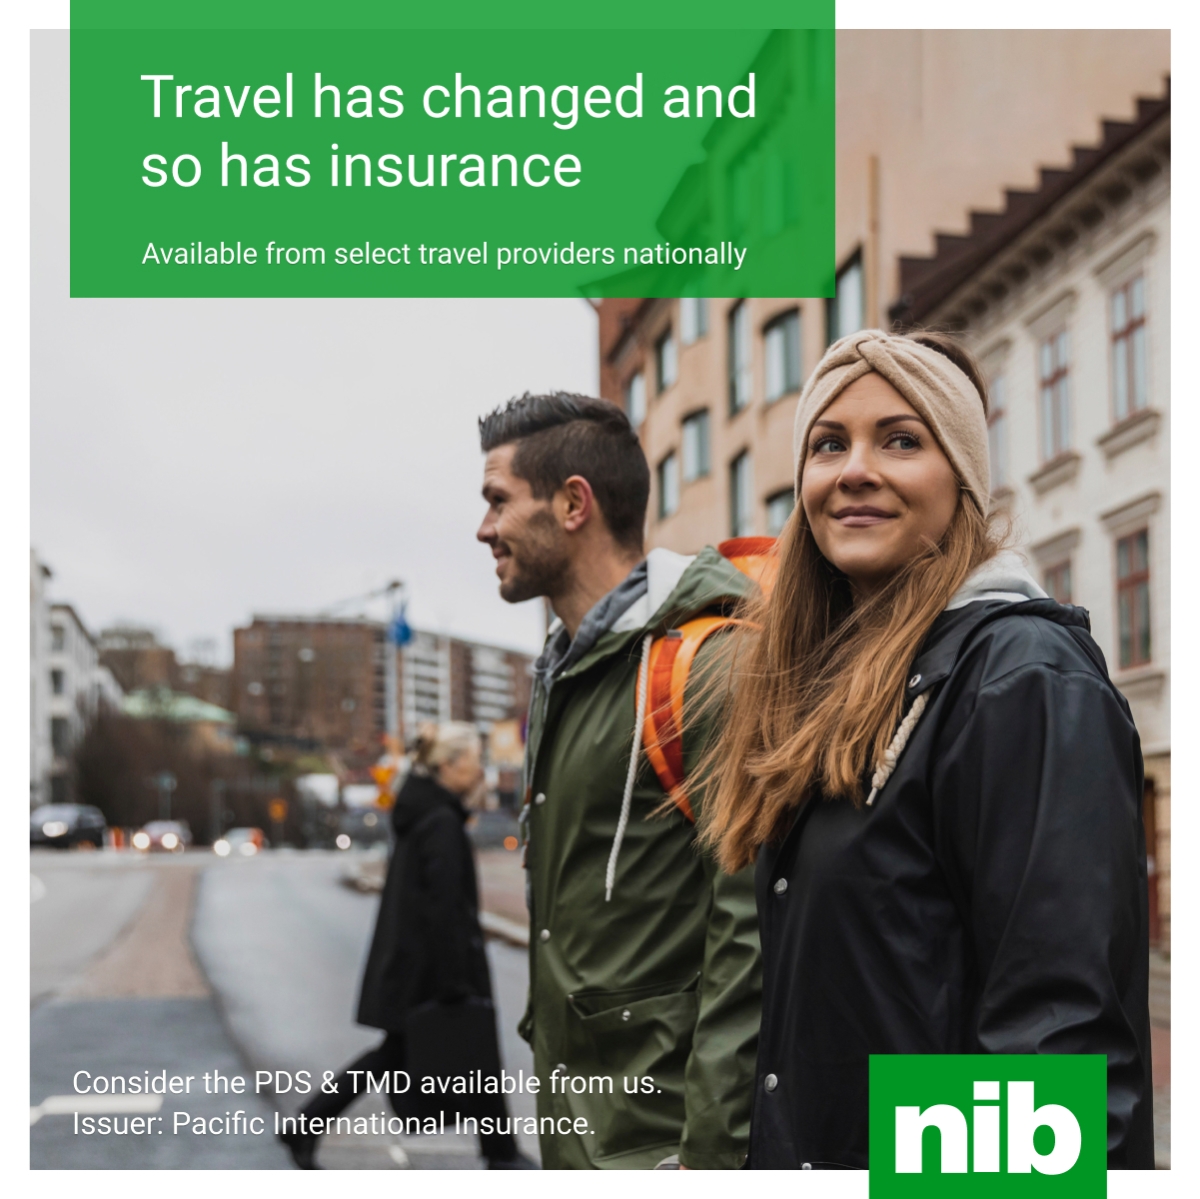 nib travel insurance code